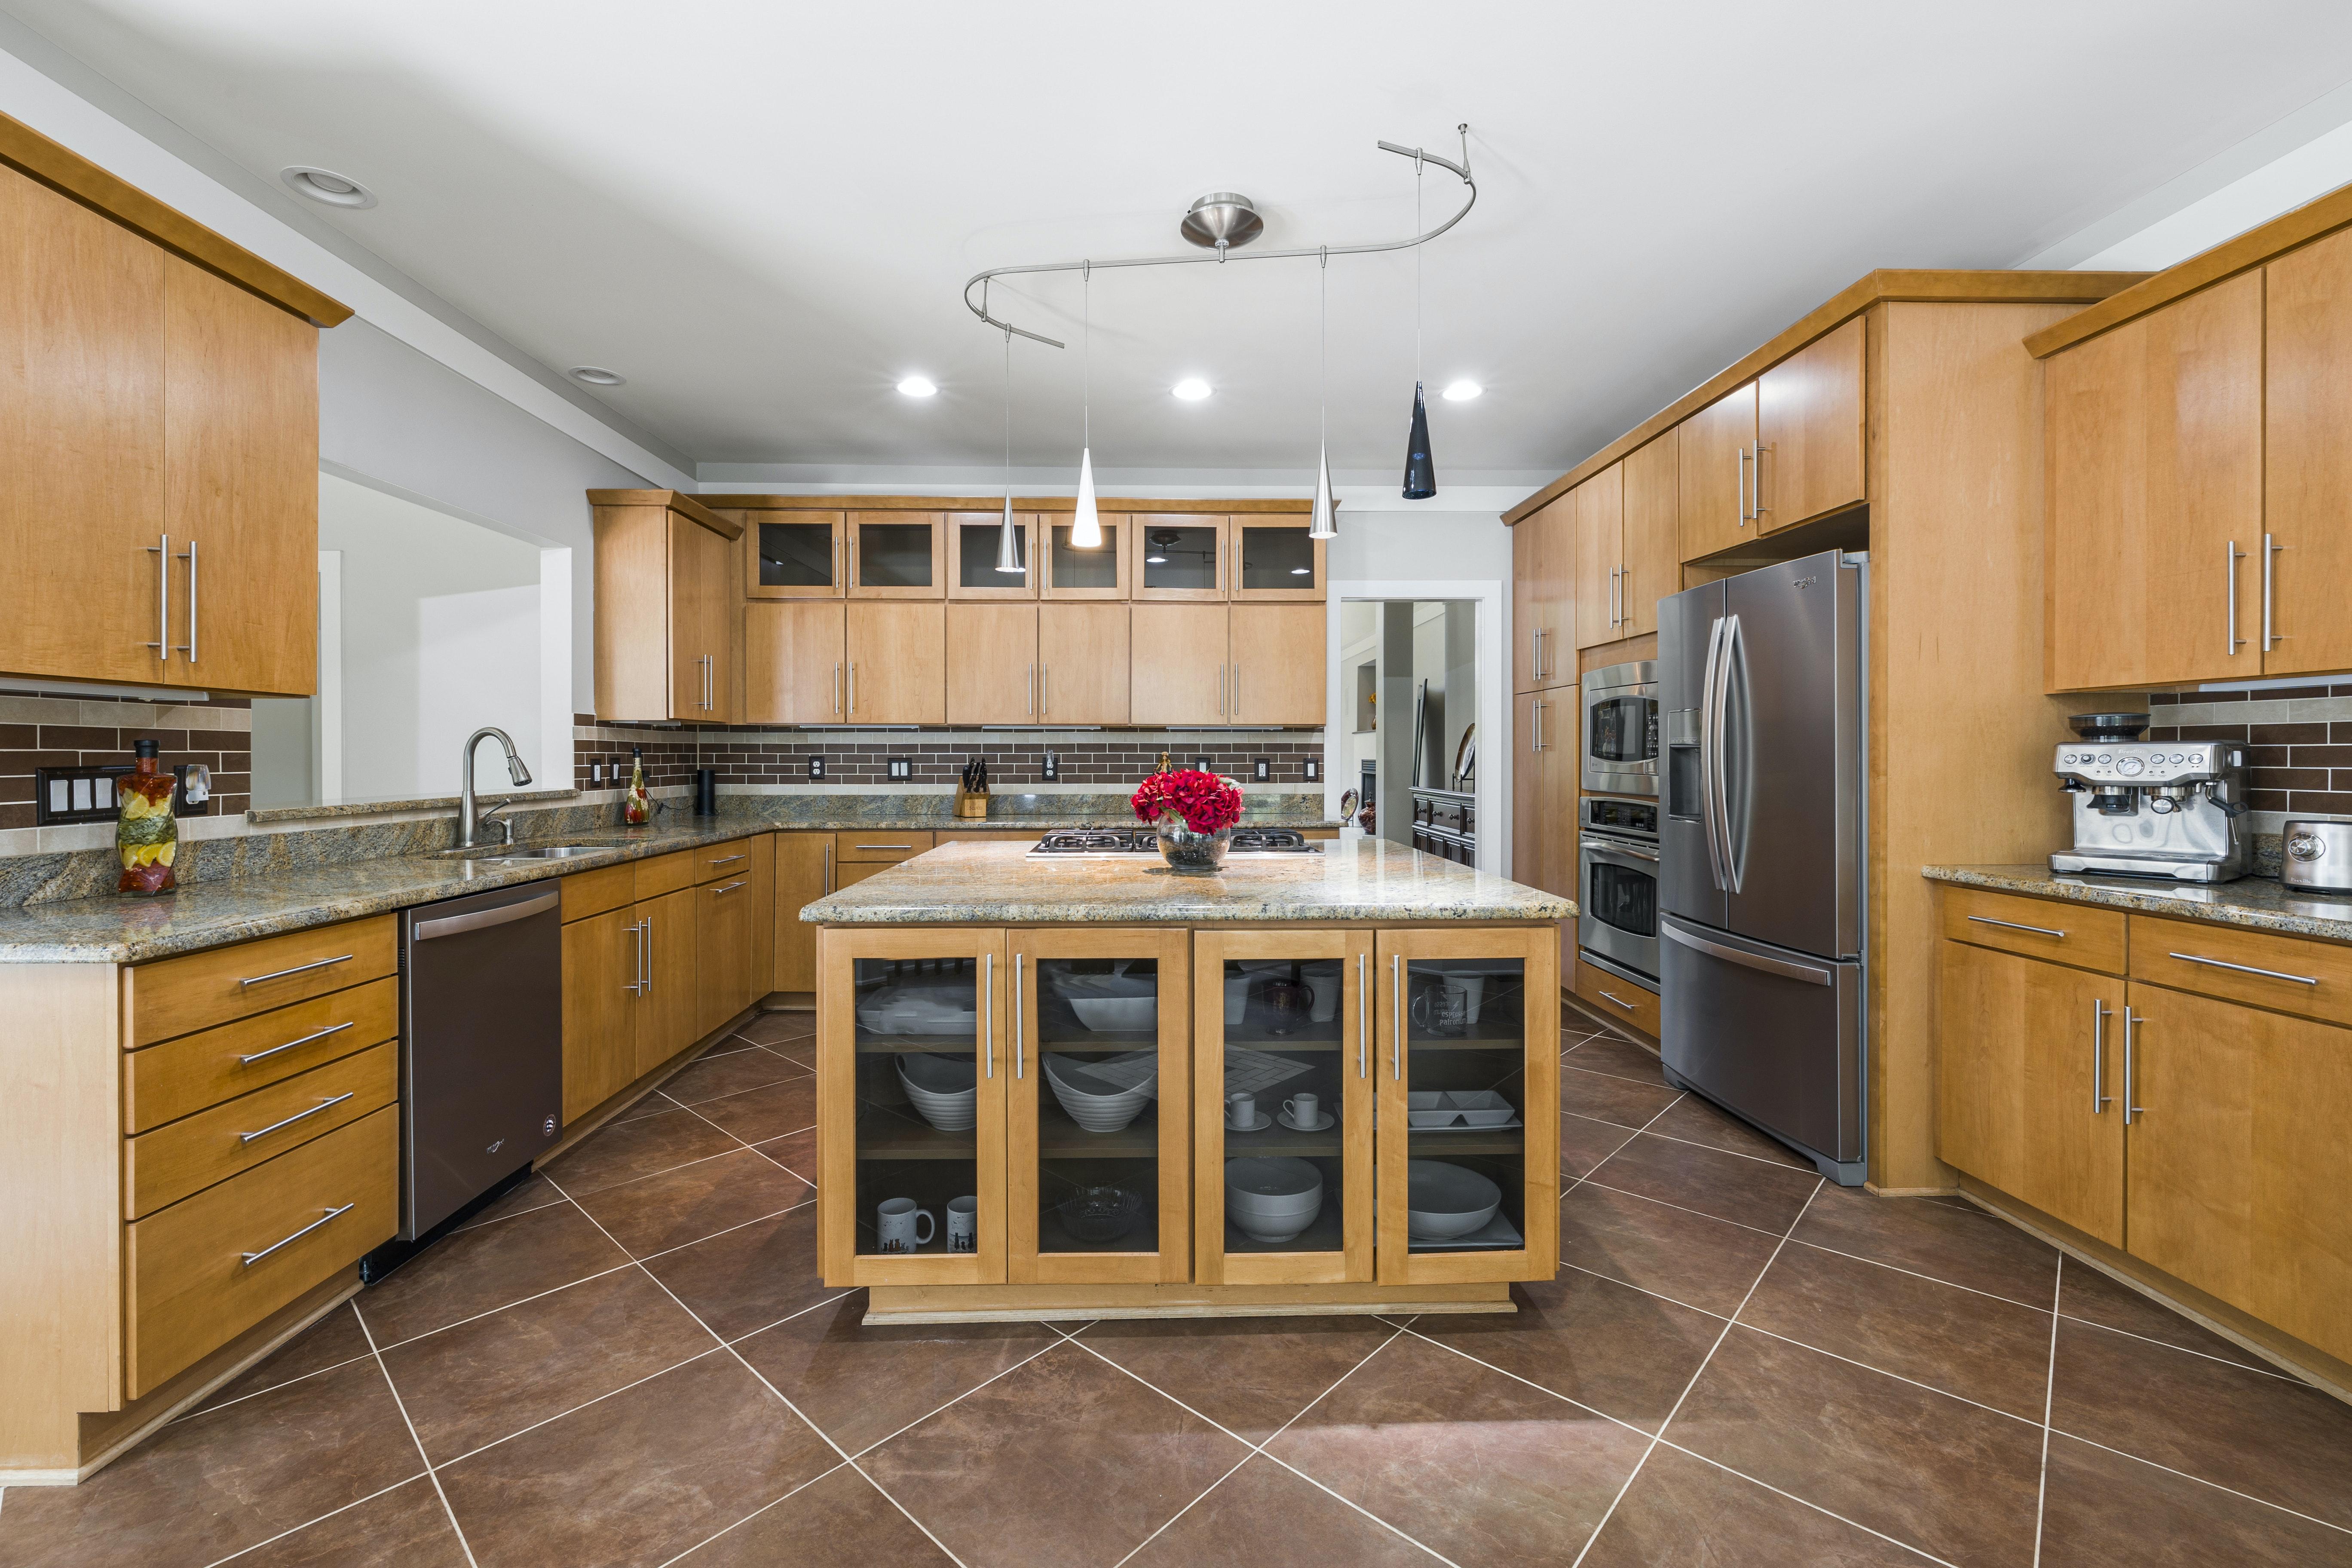 $100 000 kitchen remodel